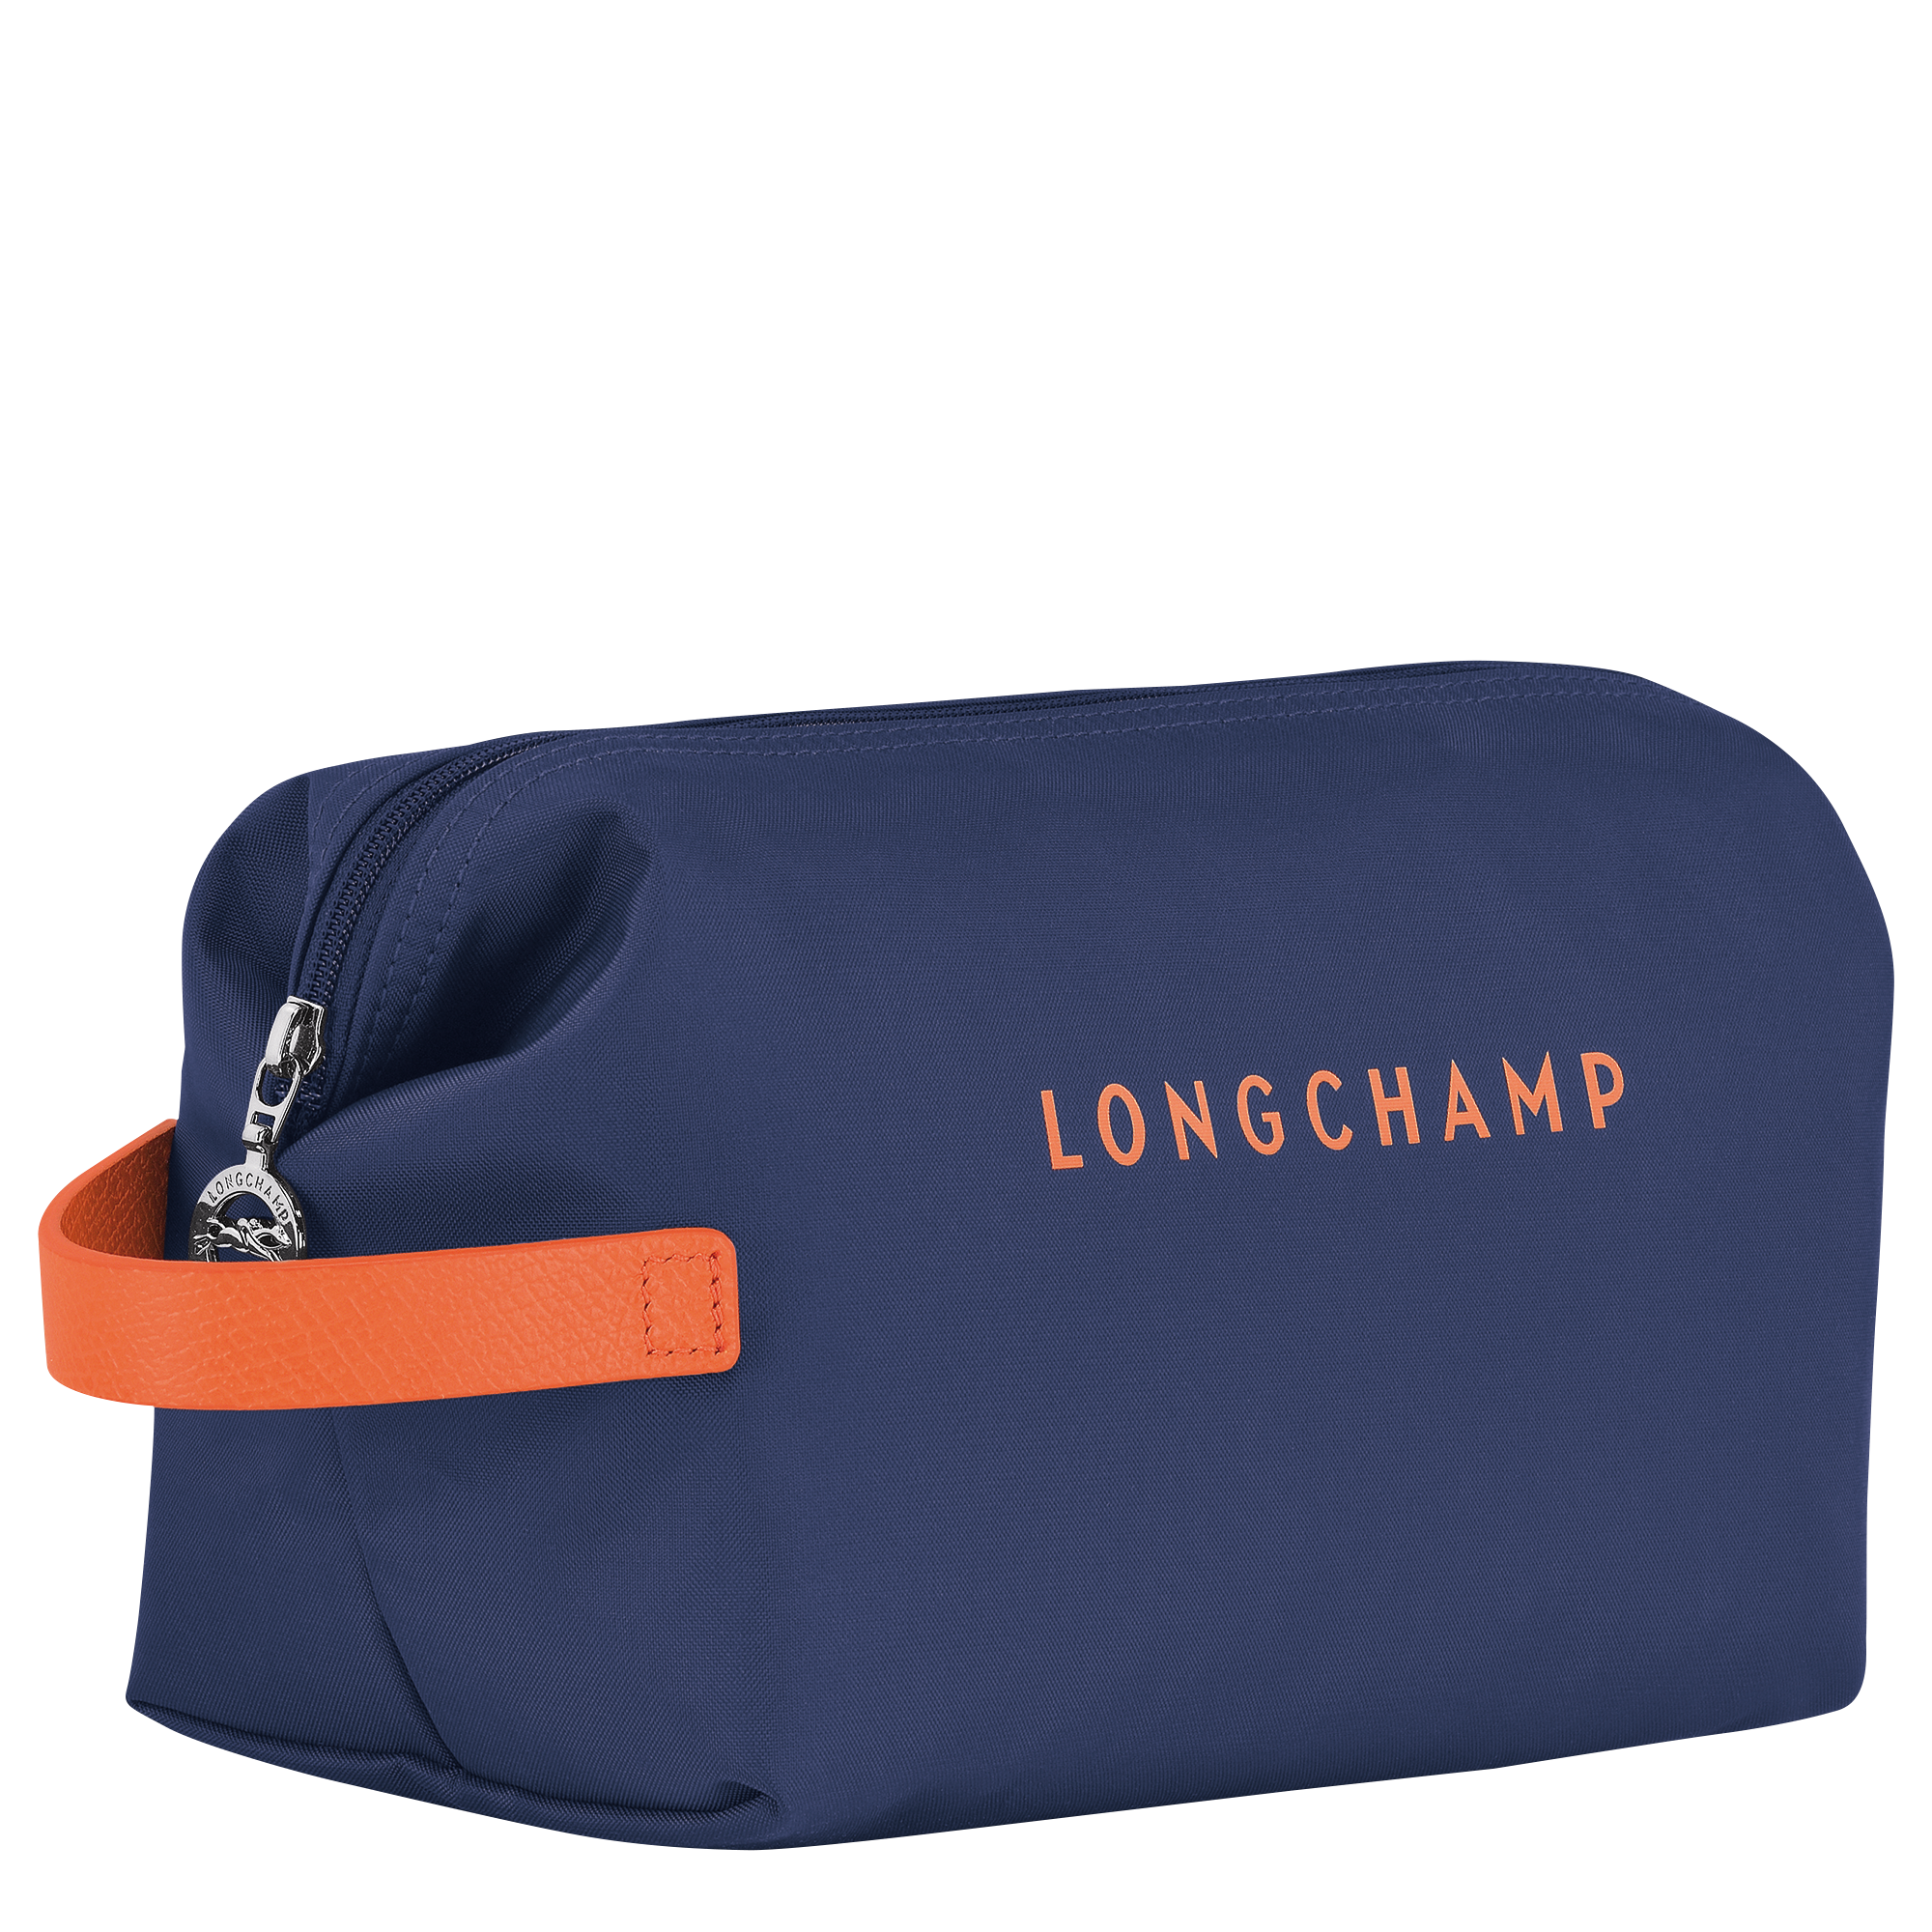 longchamp toiletry bags